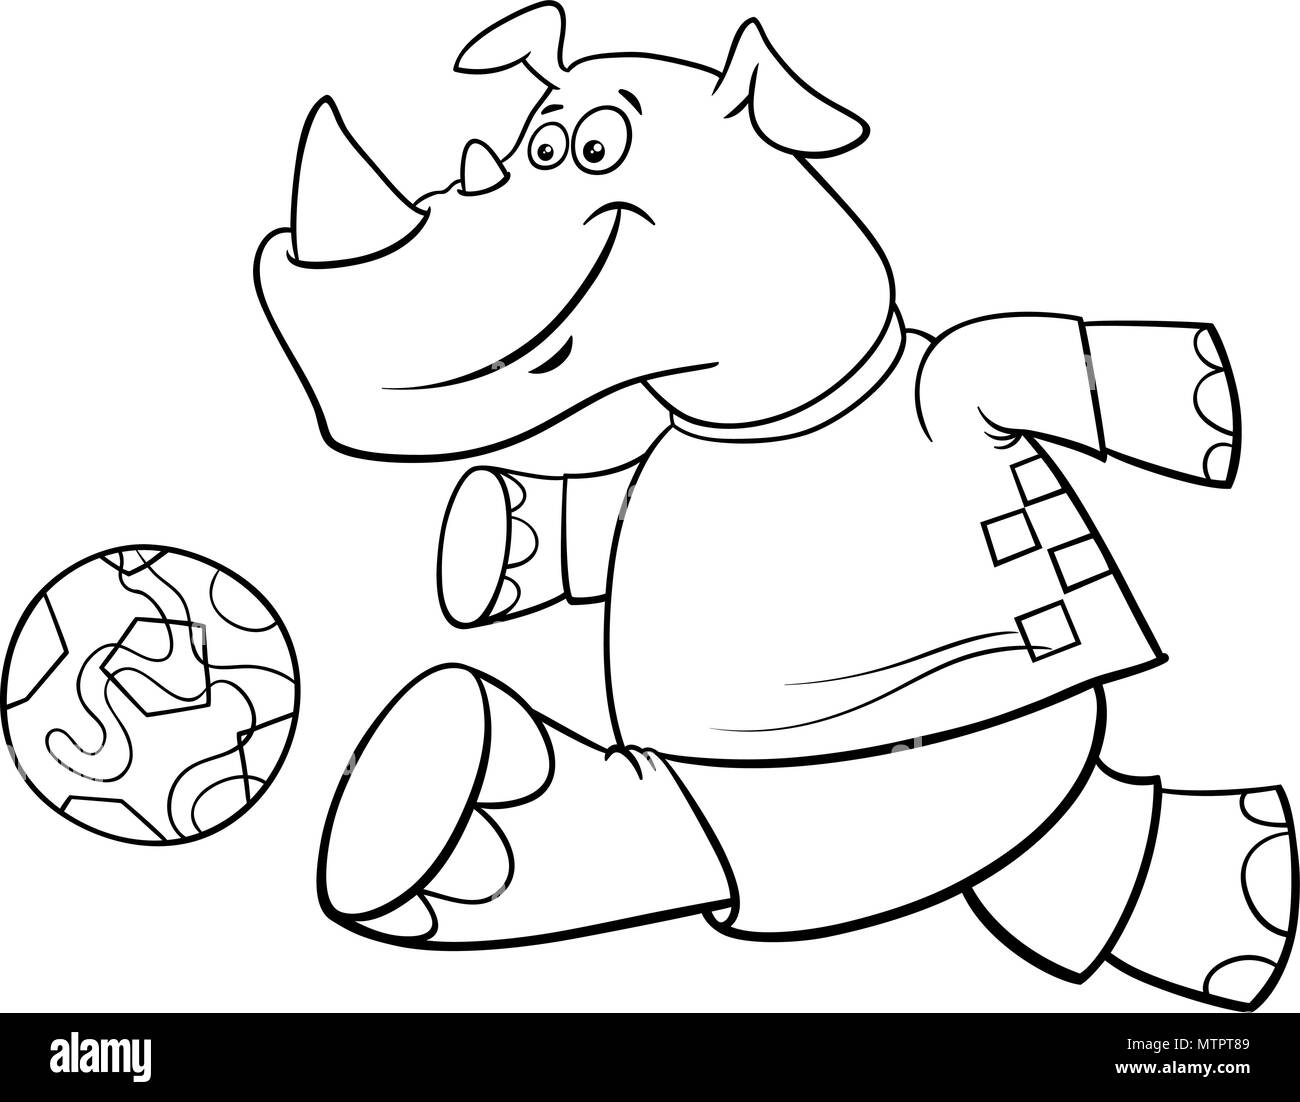 Dessin animé en noir et blanc Illustrations de Rhino football ou soccer Player Character with Ball Coloring Book Illustration de Vecteur